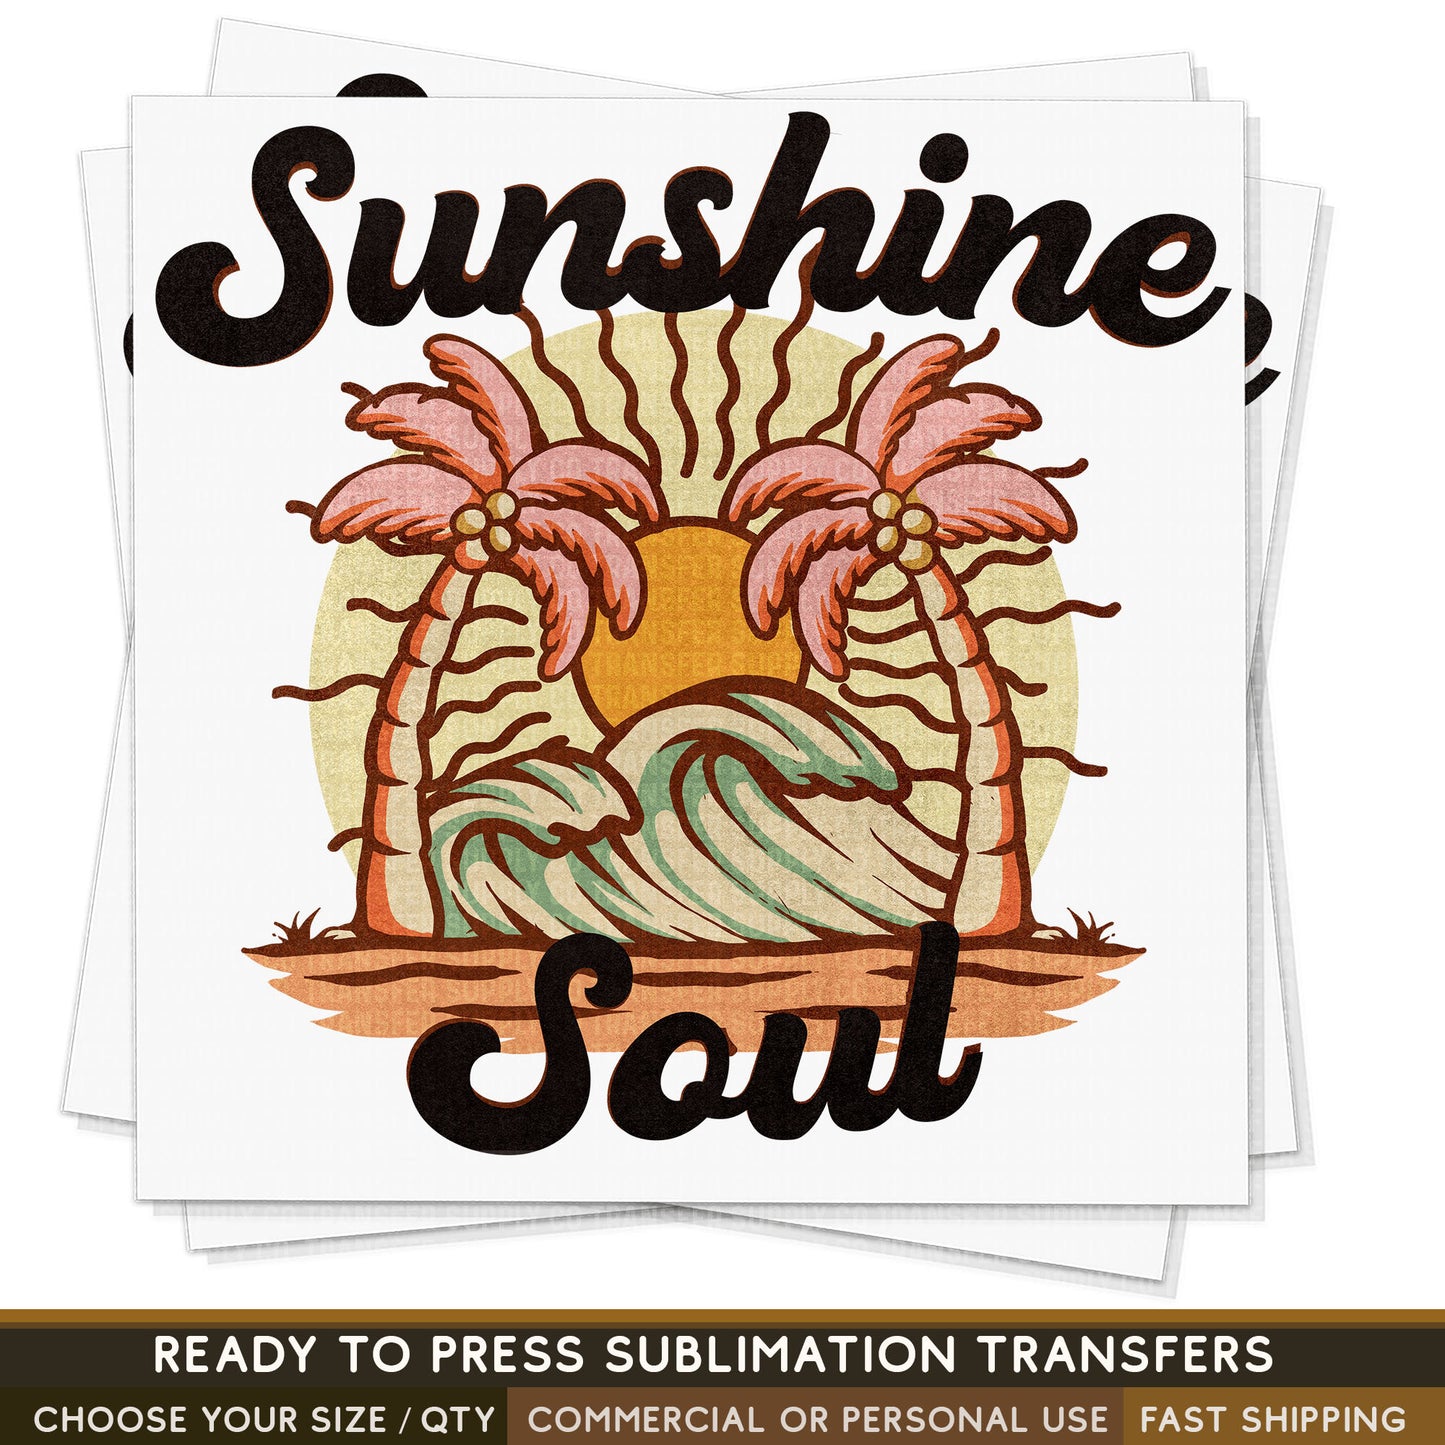 Beach Sunshine Soul, Ready To Press Sublimation Transfers, Ready To Press Transfers,Sublimation Prints, Sublimation Transfers